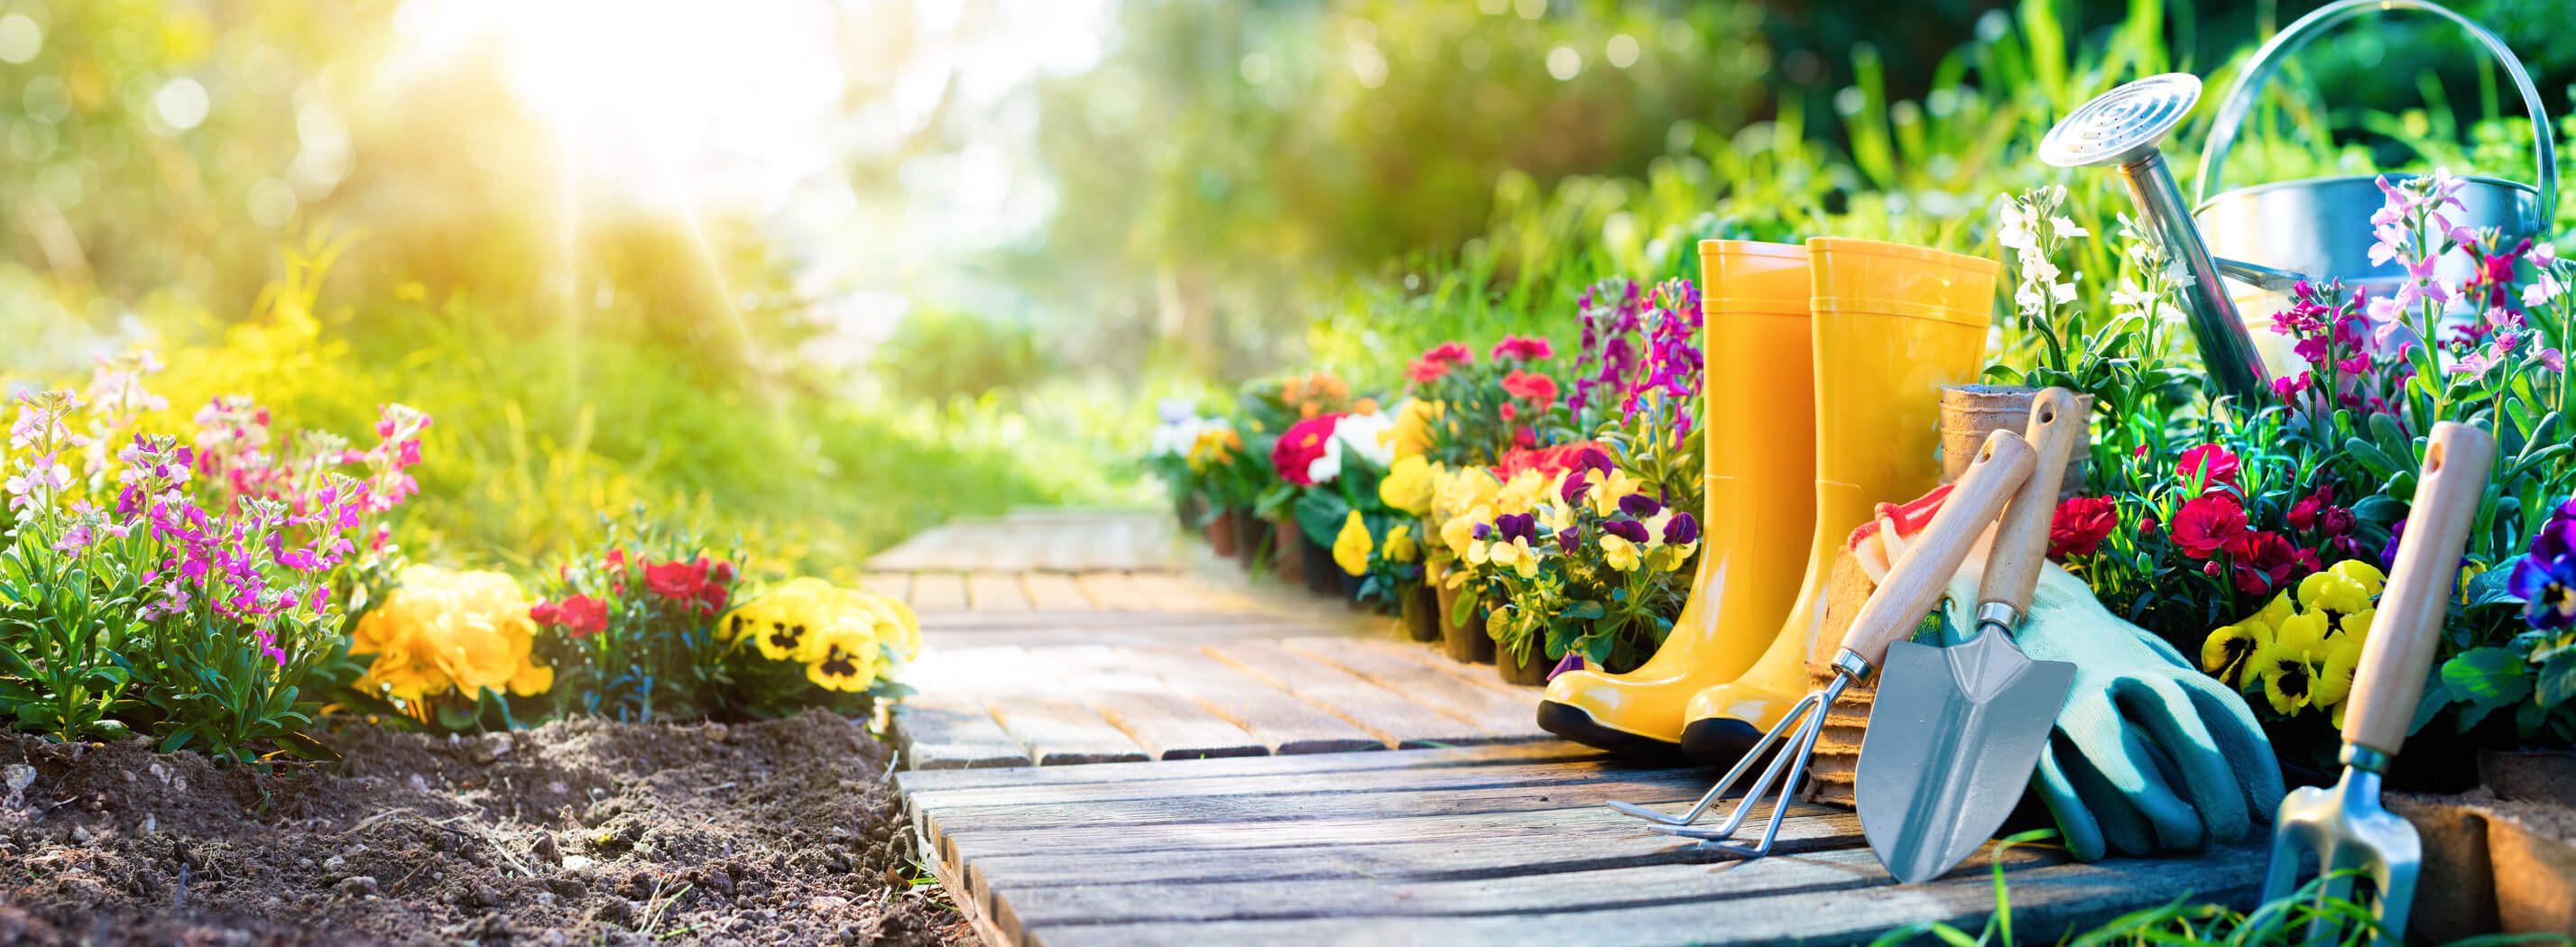 Je tuin zomerklaar maken in 5 stappen